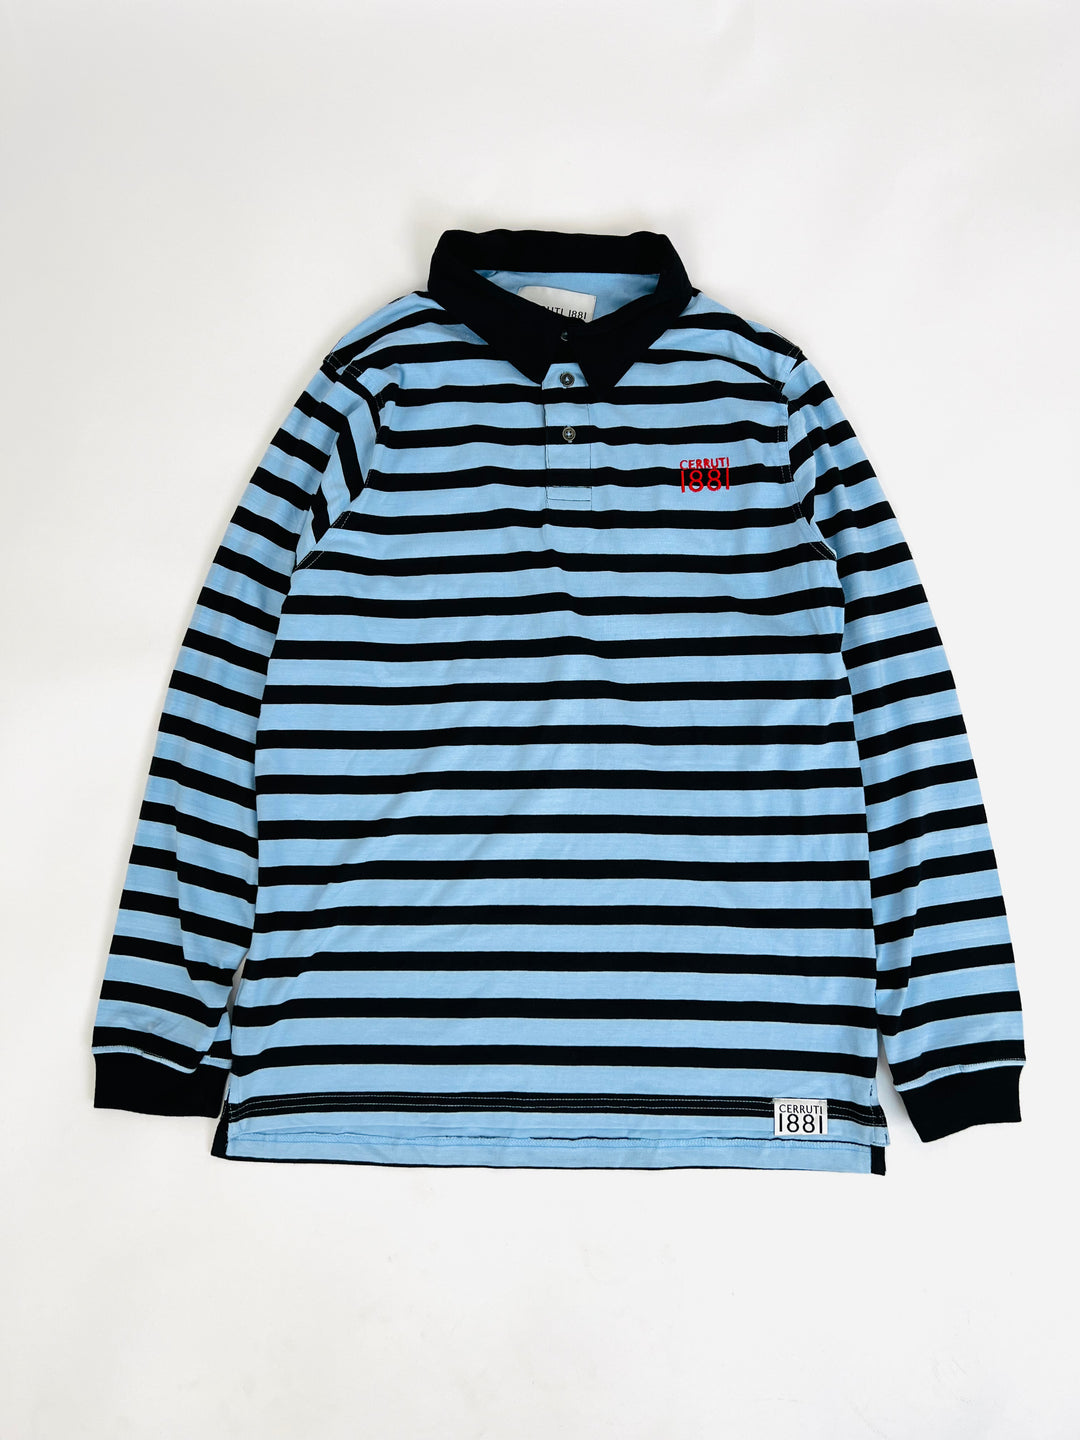 Cerruti 1881 Rugby logo Stripe Polo shirt in blue